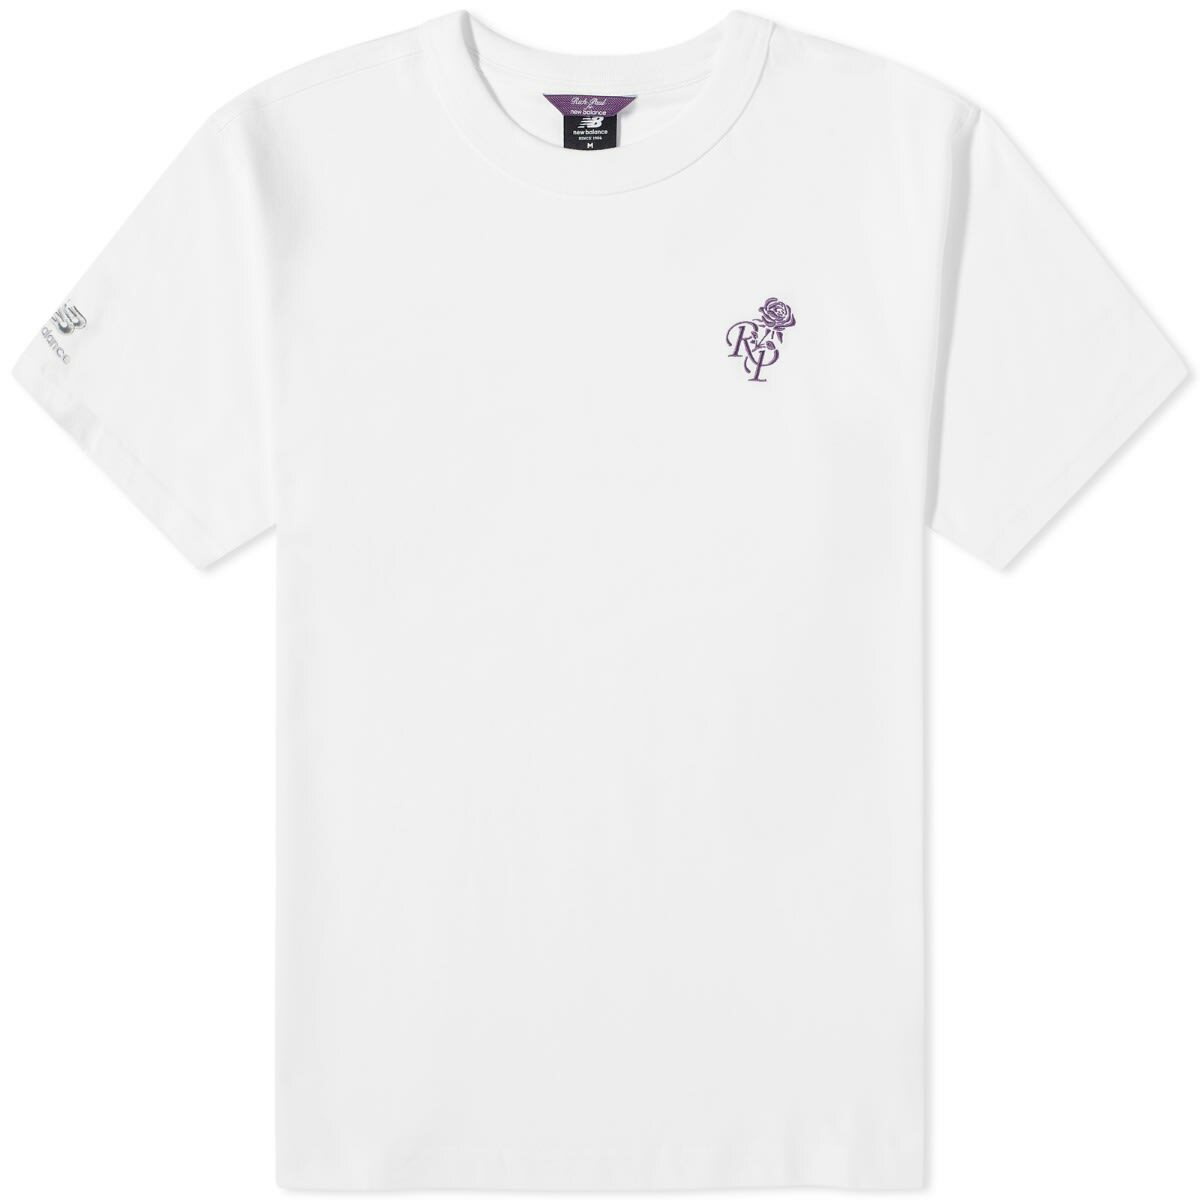 New in Paul Balance Balance x Rich White New T-Shirt